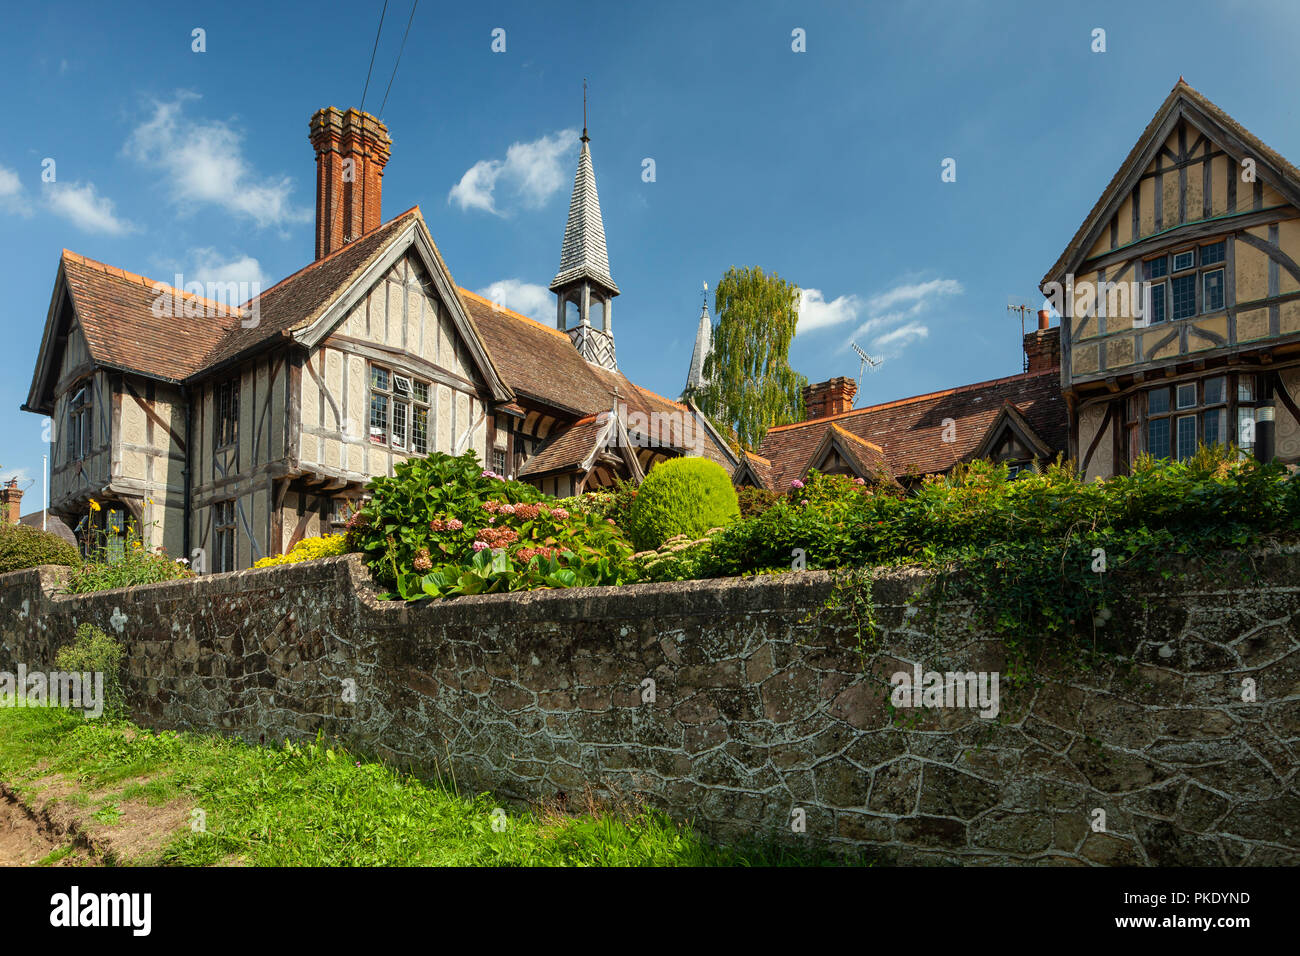 St Mary's Homes in Godstone village, Surrey, England. Stock Photo